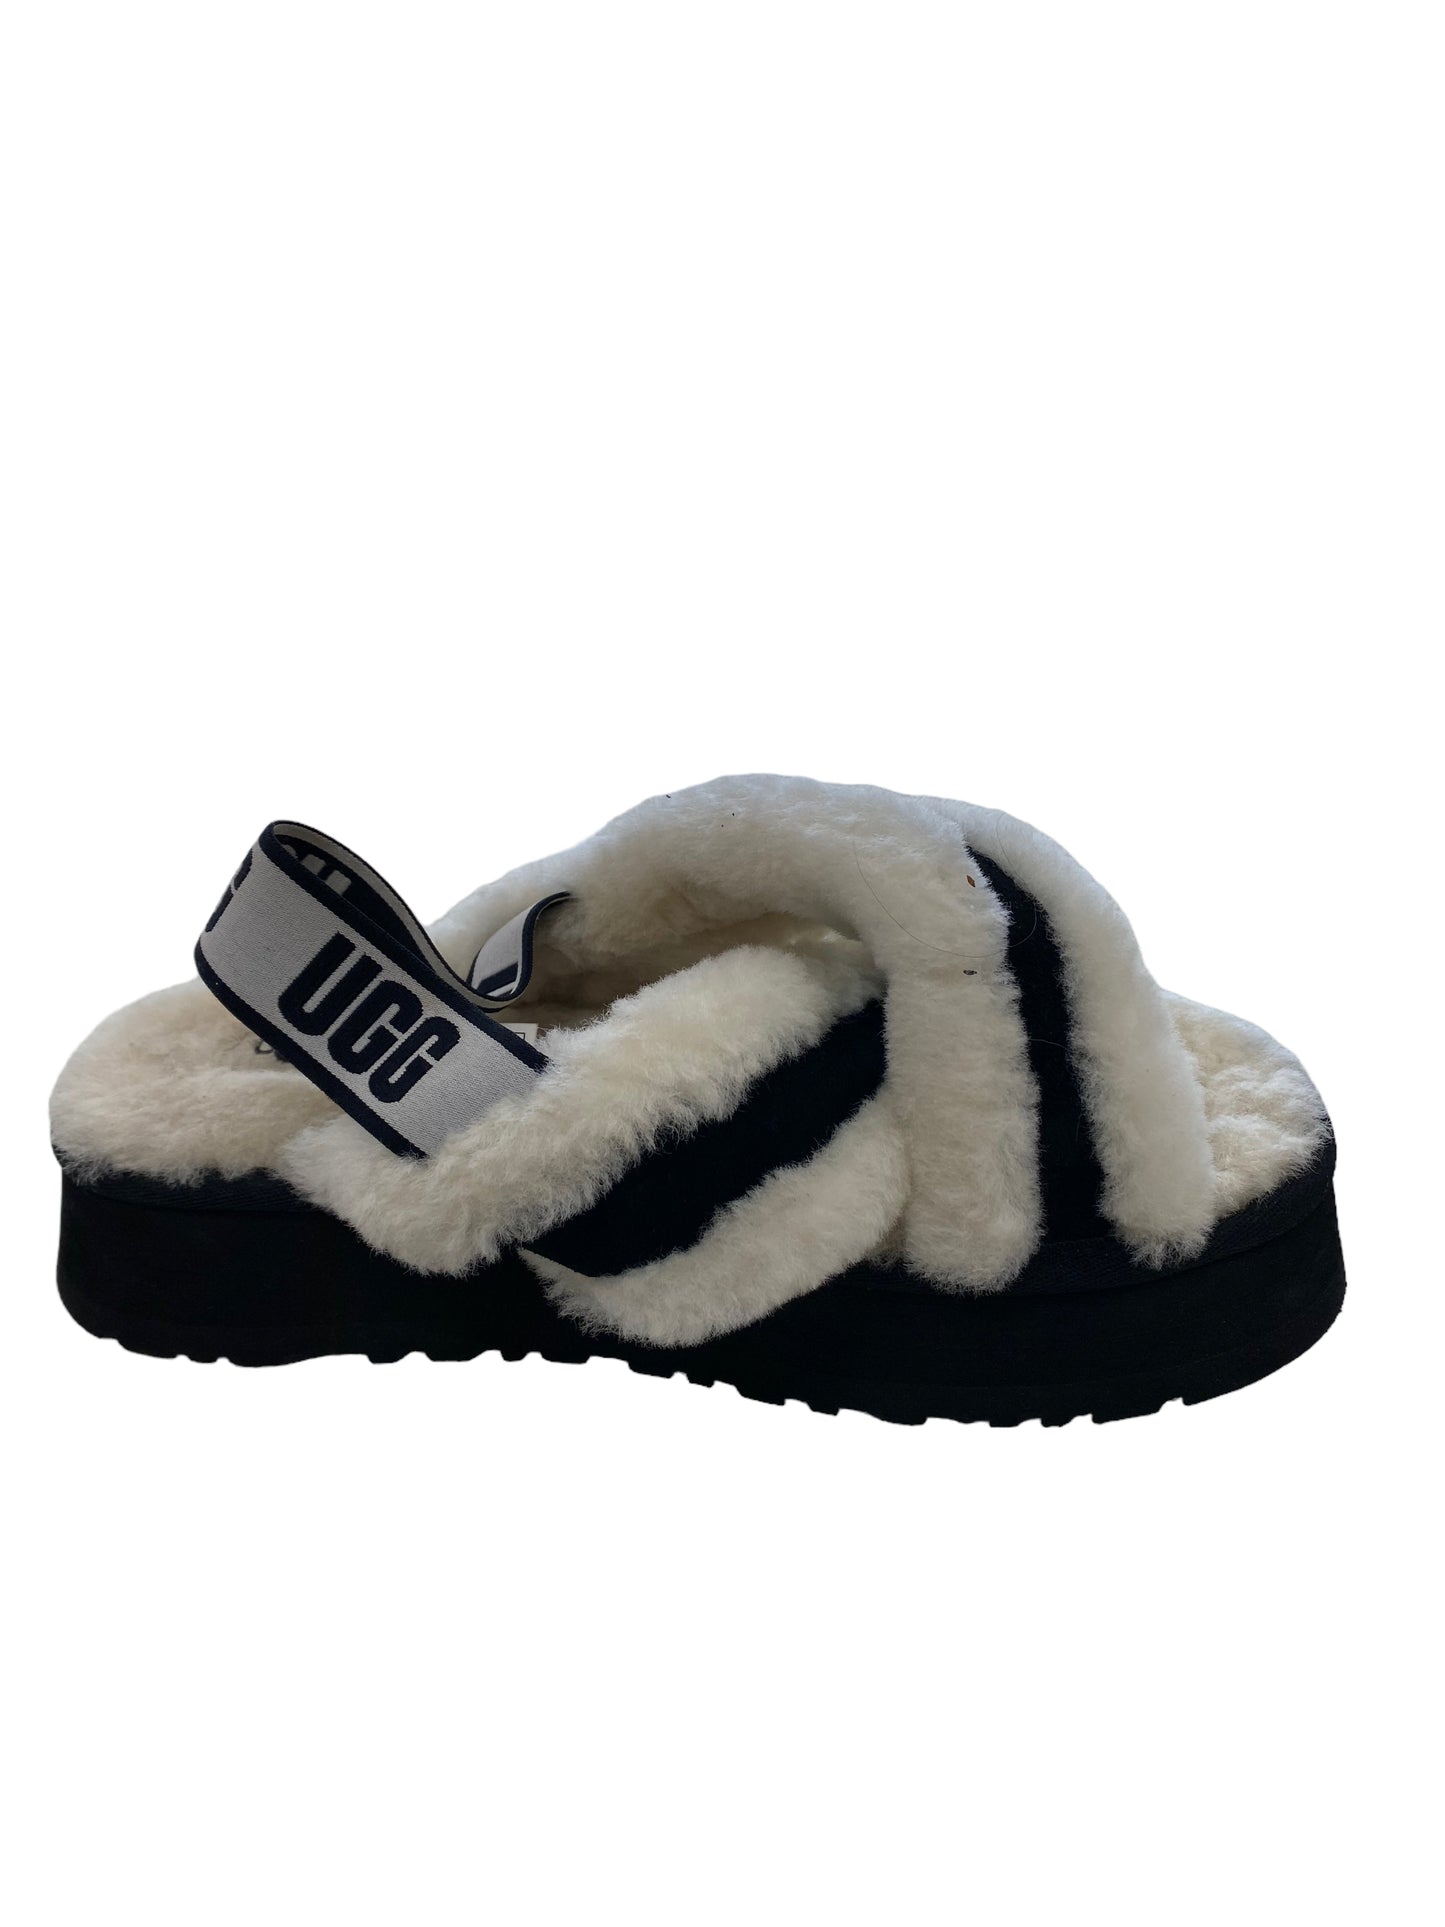 Black & White Sandals Heels Block Ugg, Size 10